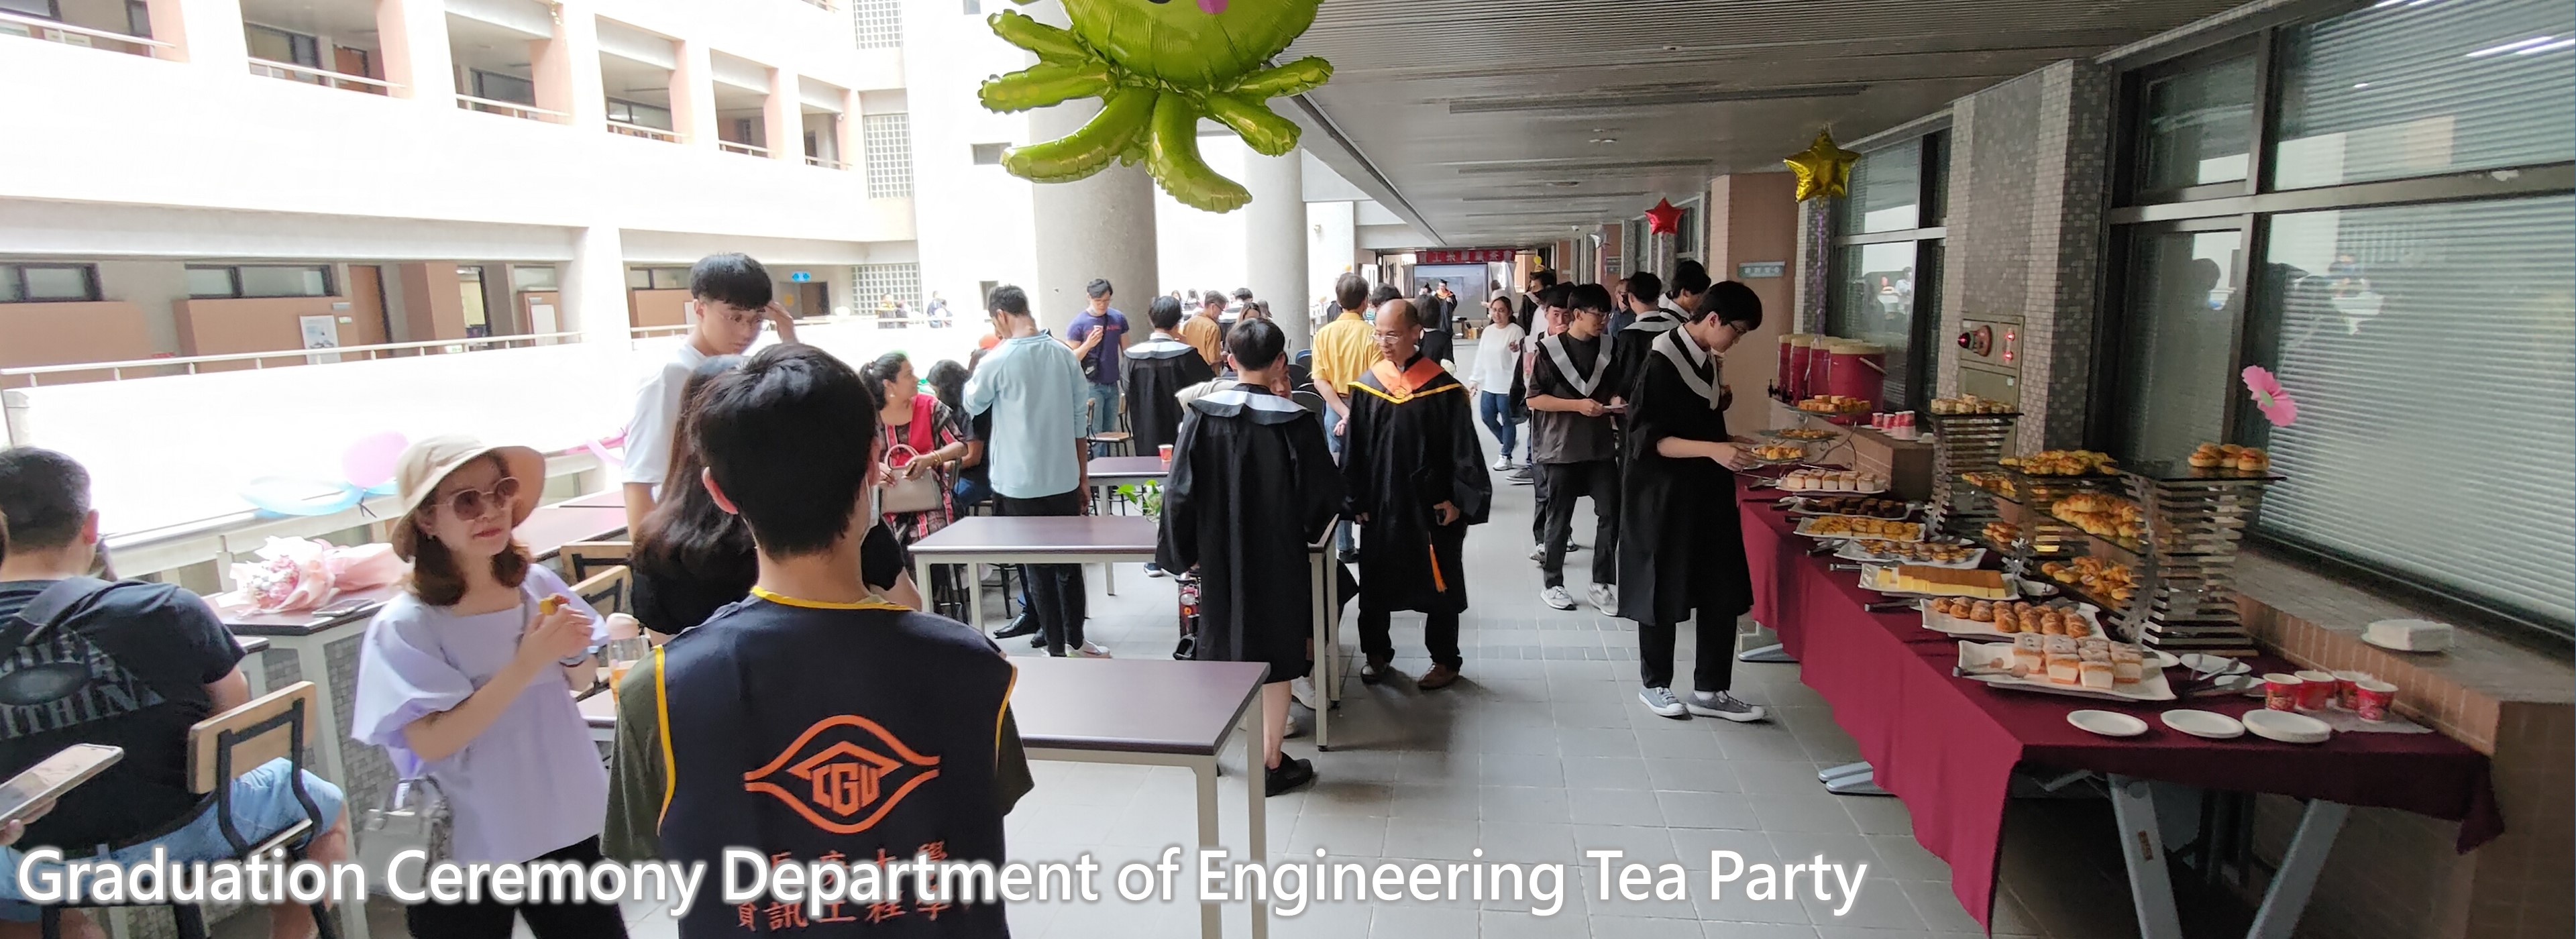 20230603Graduation Ceremony Department of Engineering Tea Party